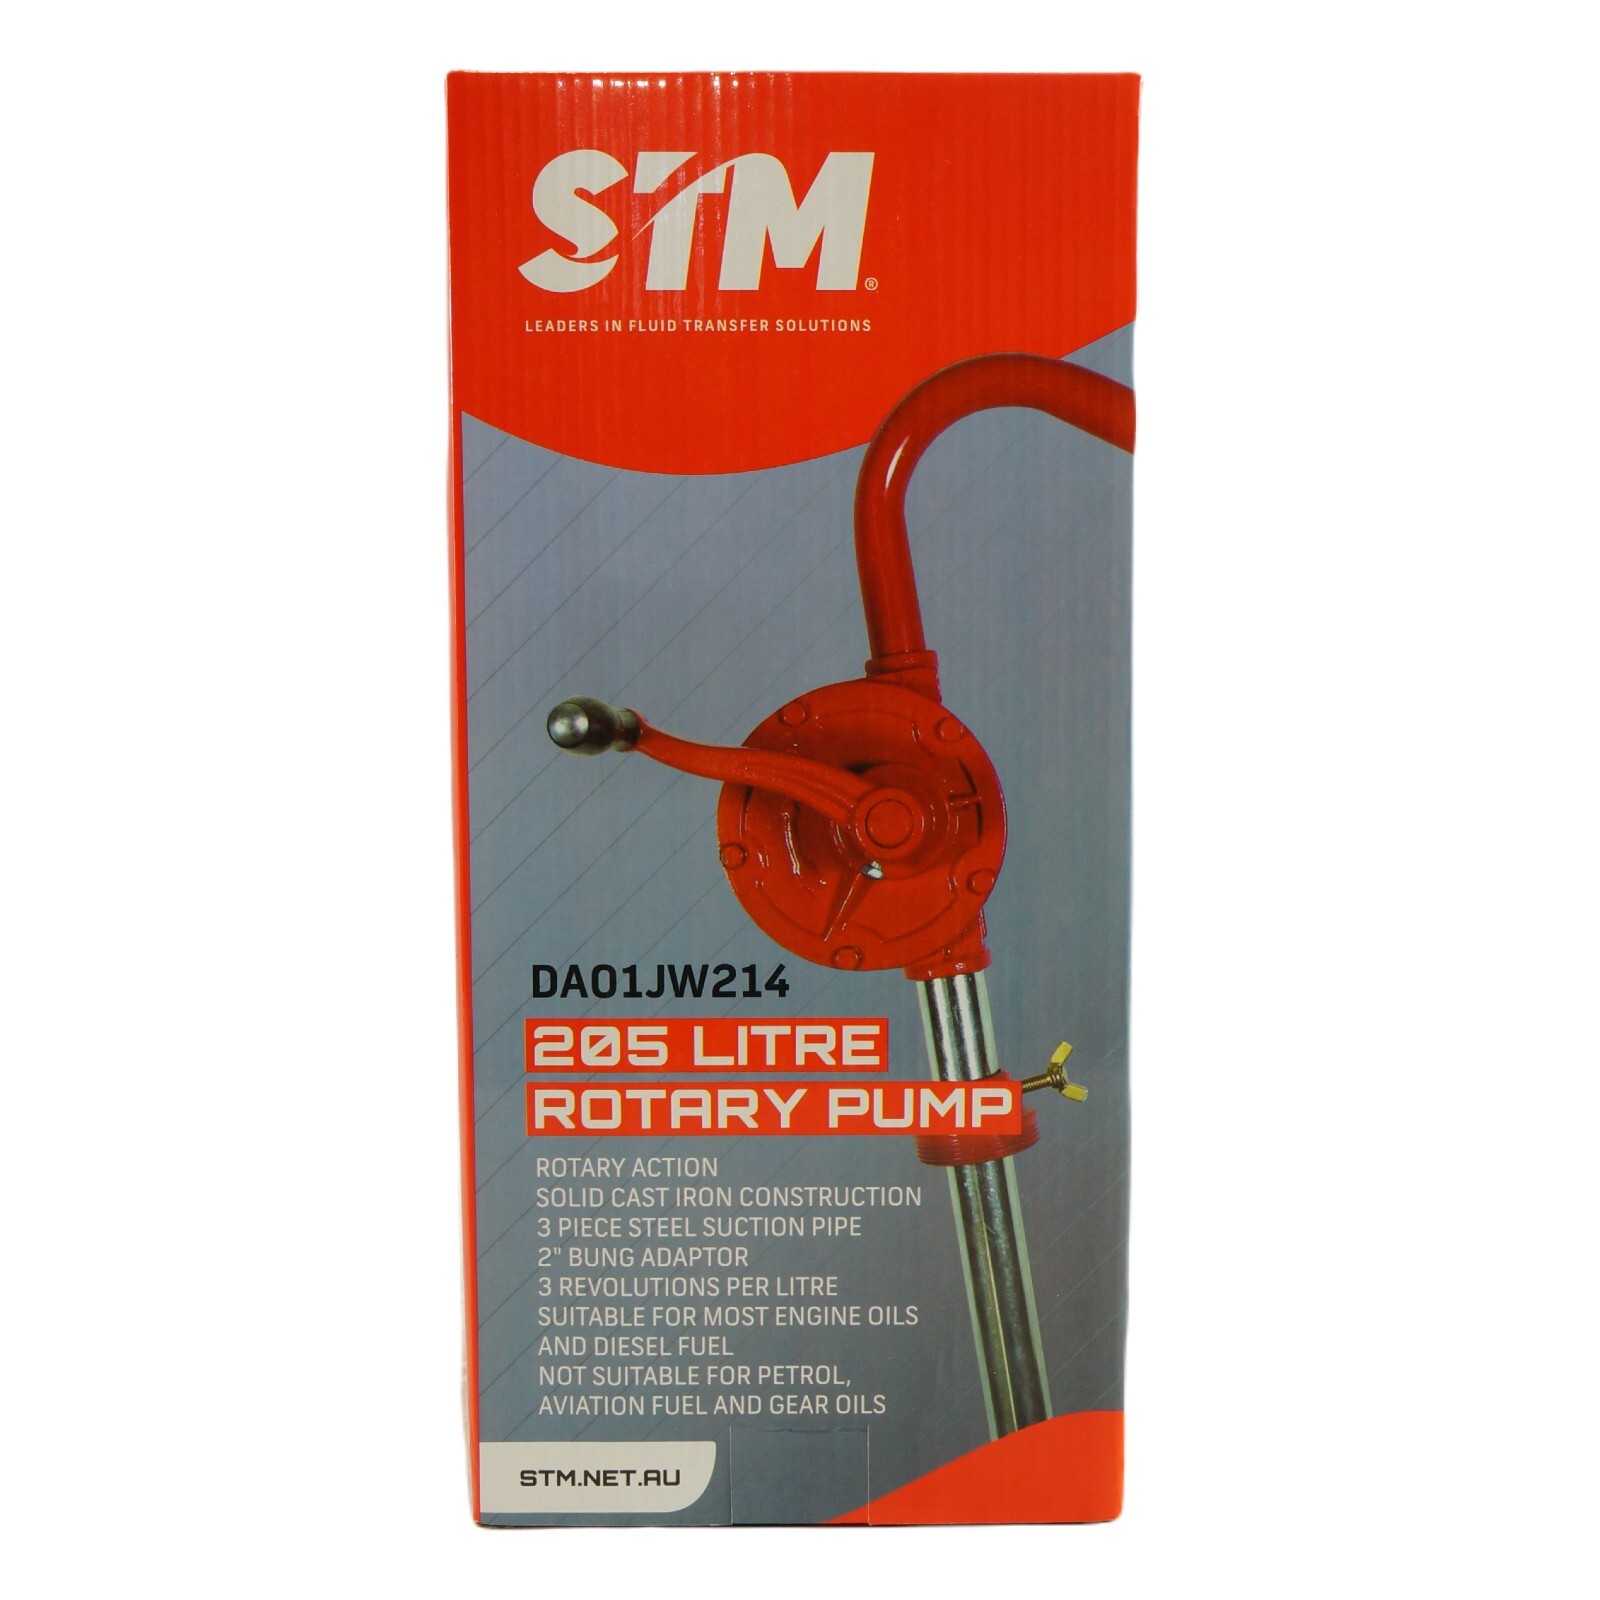 STM 60 or 205 Litre Drum Motor Oil & Diesel Solid Cast Iron Rotary Pump DA01JW214